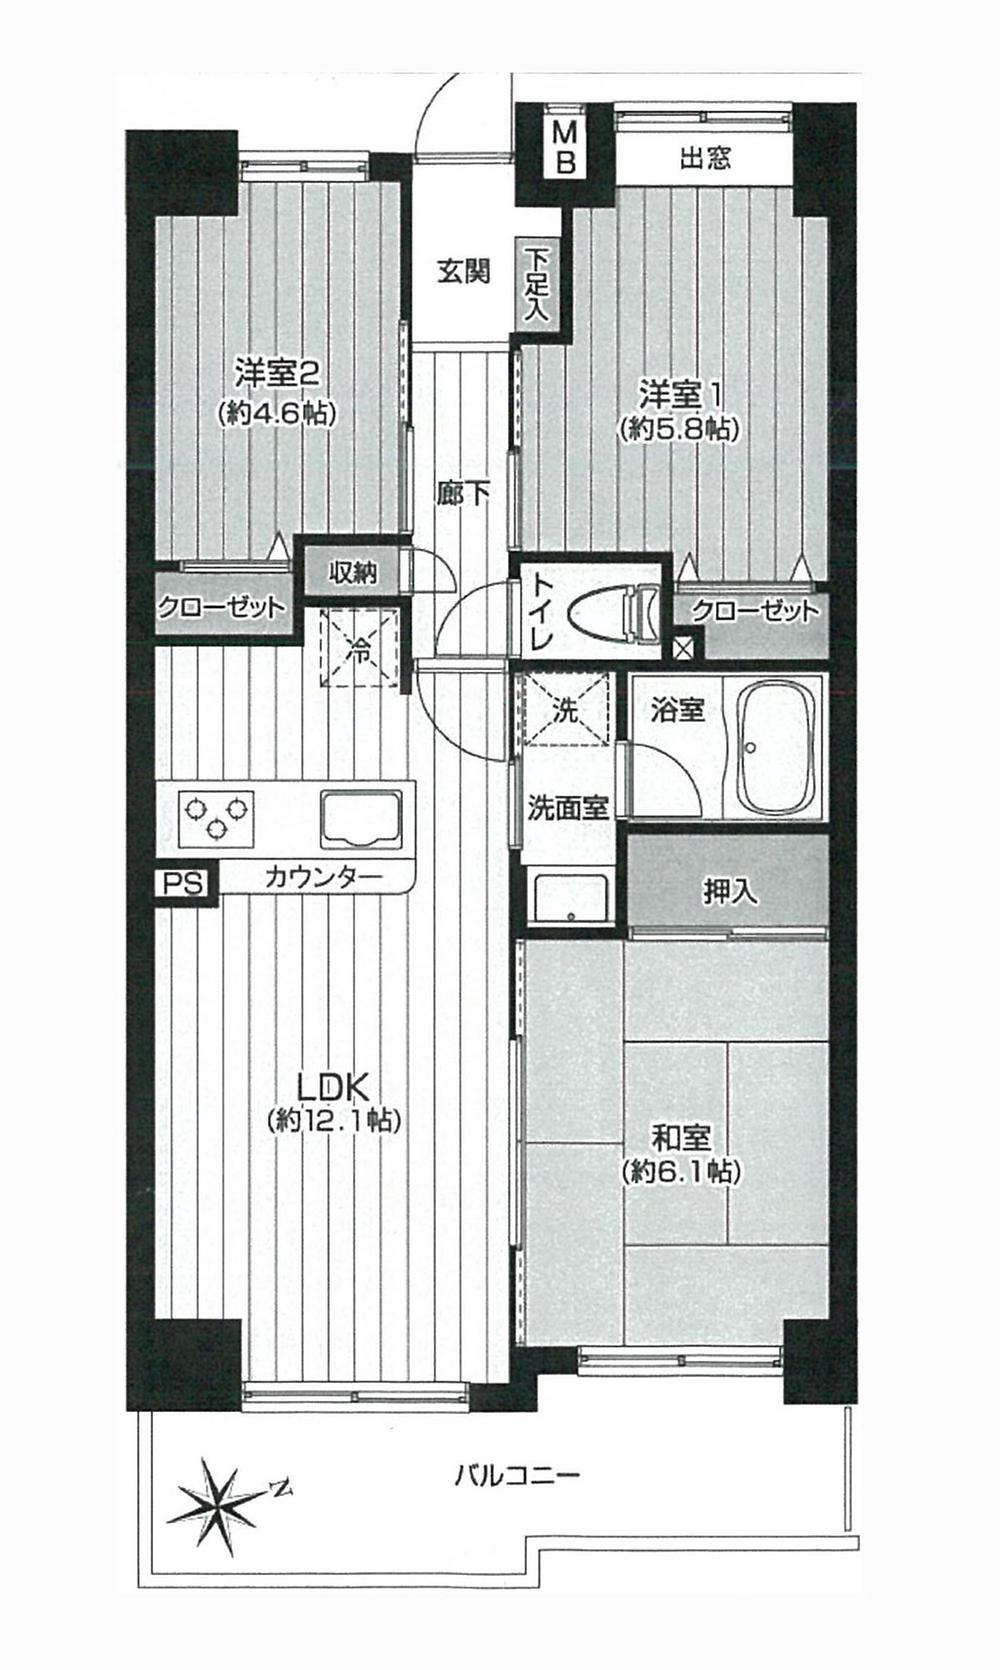 Floor plan. 3LDK, Price 27,800,000 yen, Footprint 59.3 sq m , Balcony area 8.77 sq m